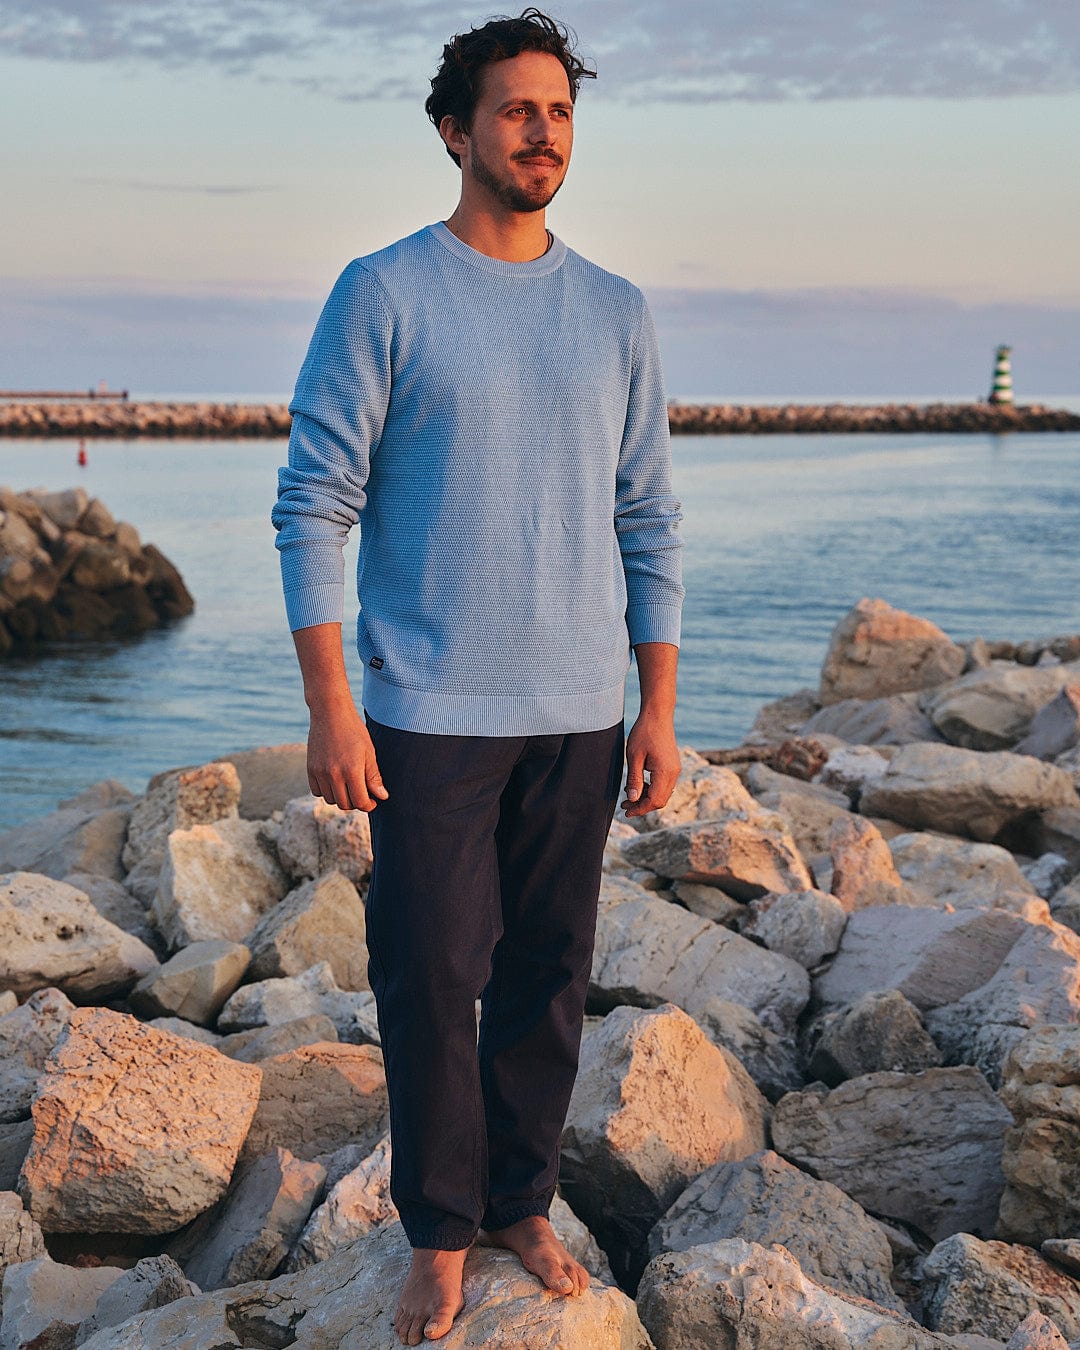 A man standing on rocks next to the ocean wearing Saltrock's Meddon - Mens Twill Trouser - Blue sweater.